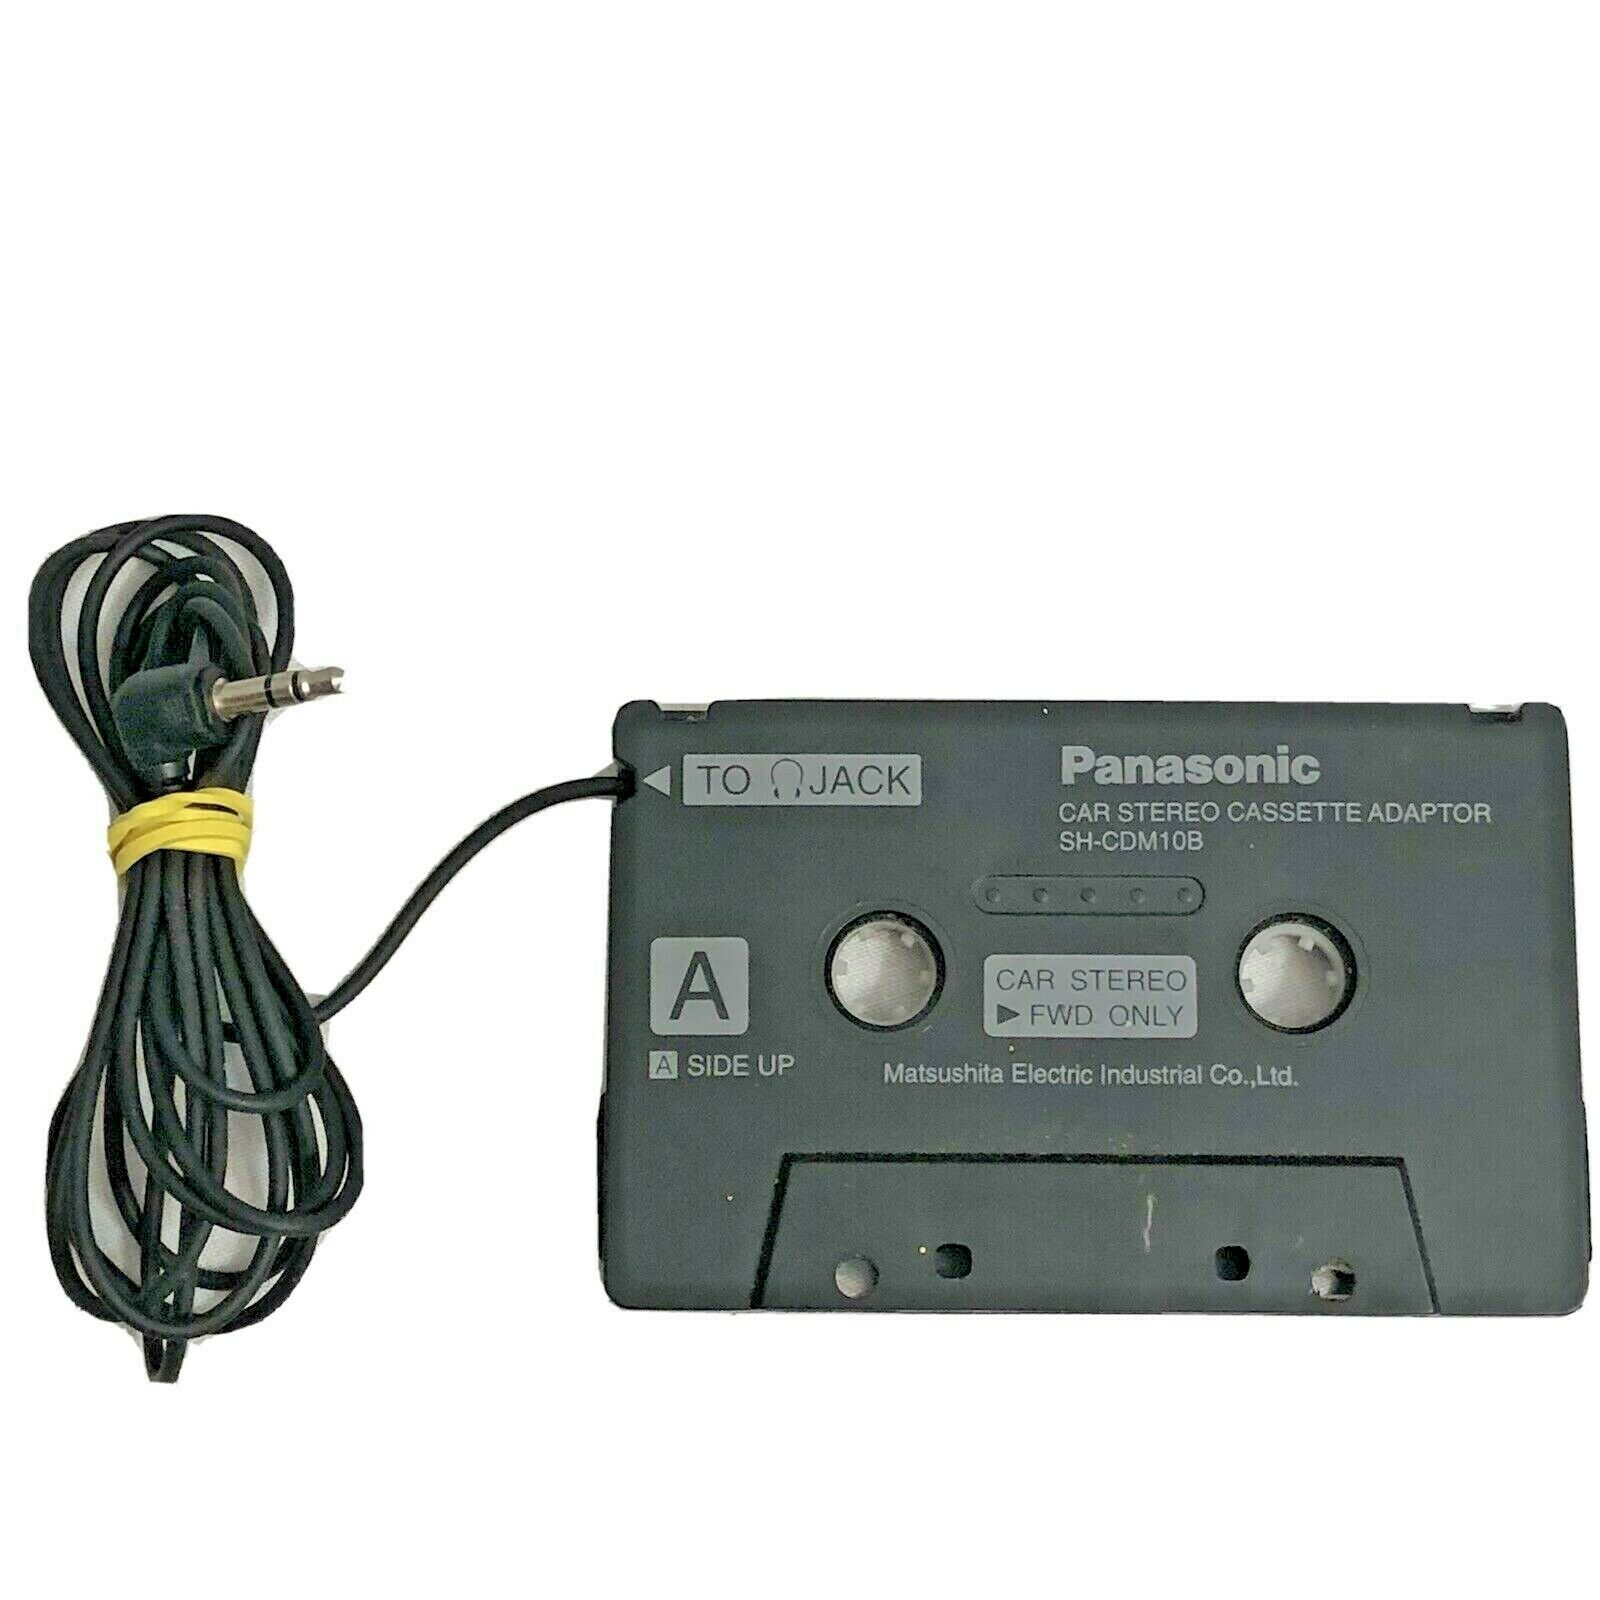 Vintage Panasonic Sh-cdm10b Car Stereo Cassette Adaptor Tested Works